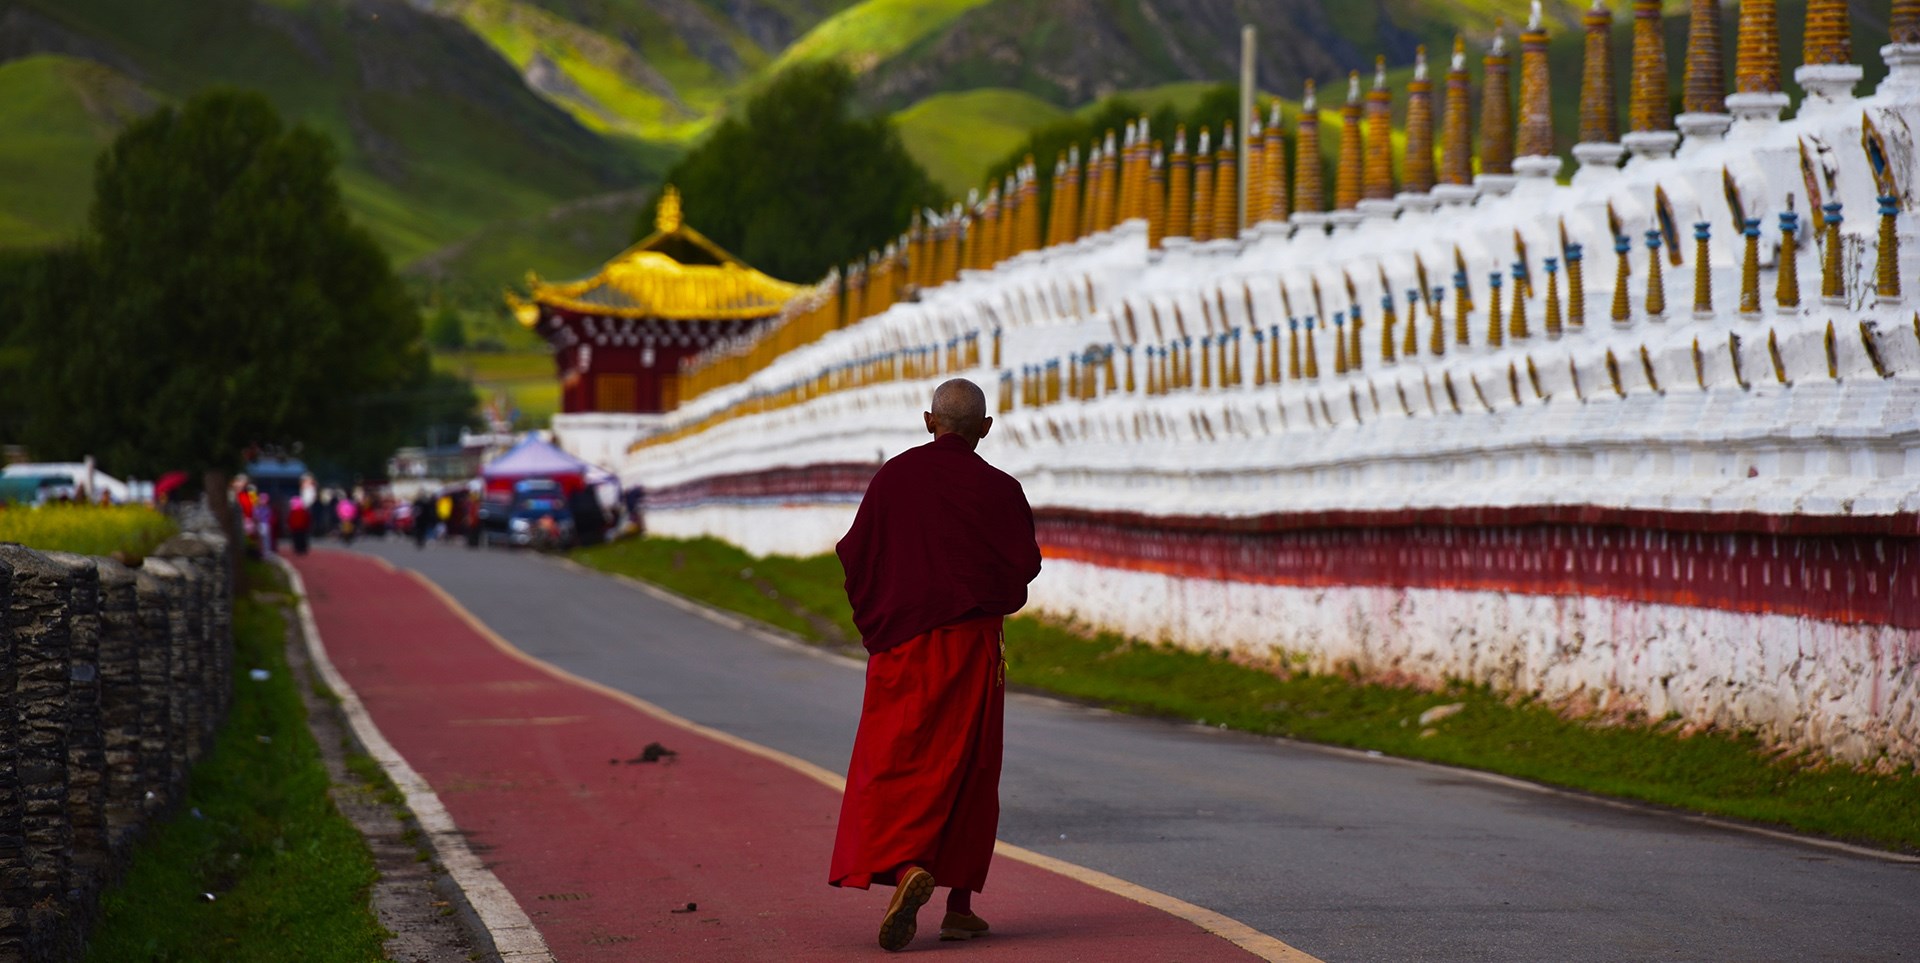 Viaggio via Terra attraverso Kham in Tibet